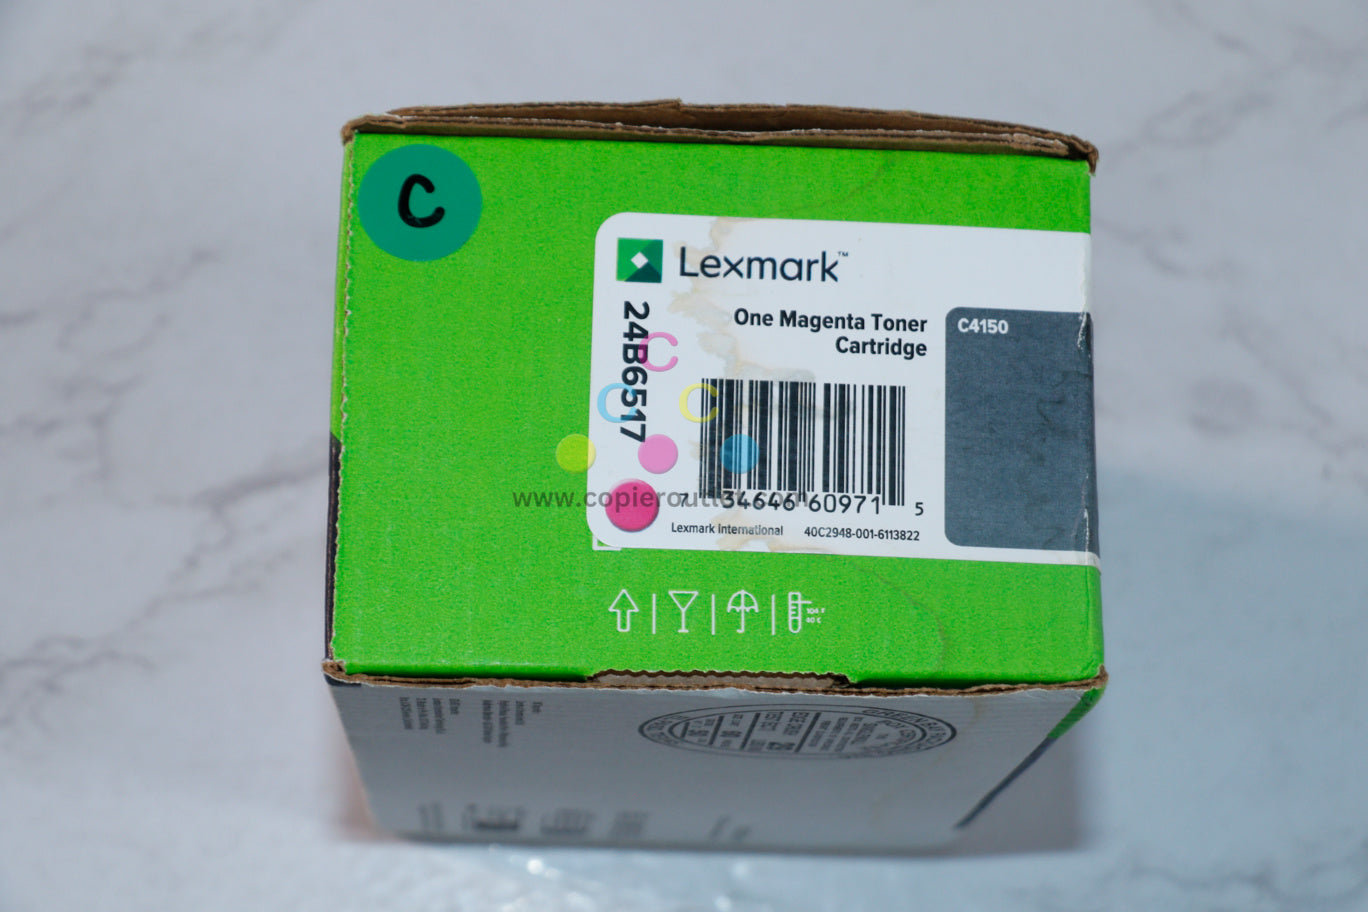 Cosmetic OEM Lexmark C4150 Magenta Toner Cartridge 24B6517 (Water Damaged Box)